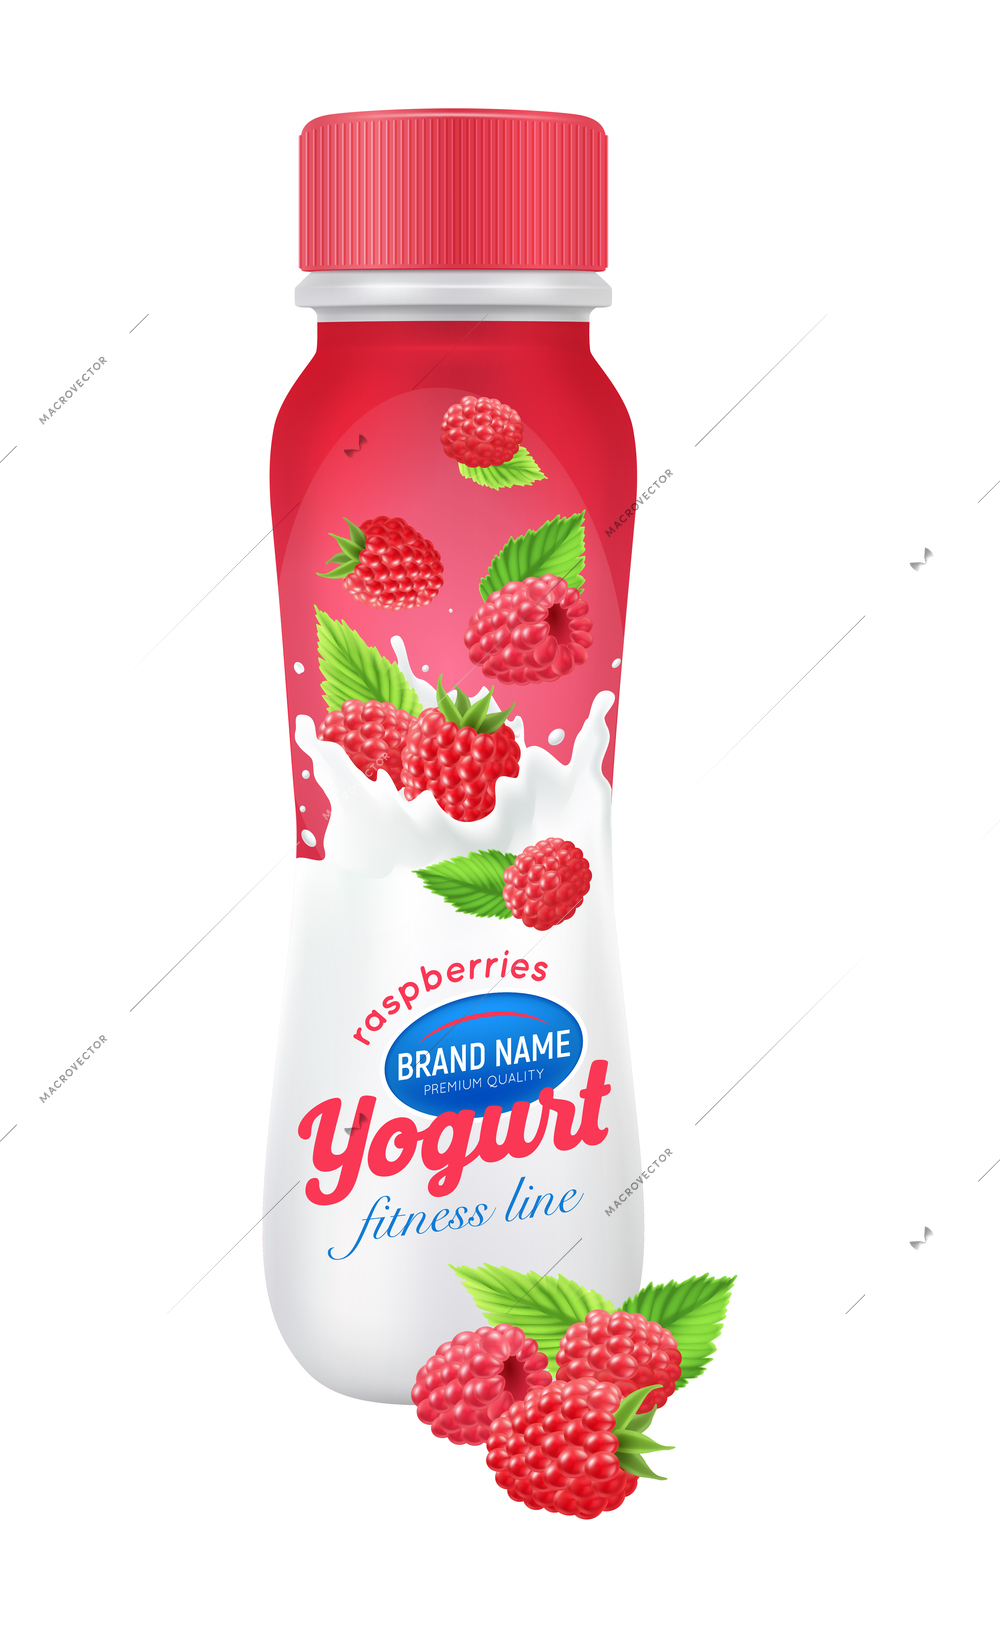 Realistic drinkable raspberry yogurt bottle packaging design template vector illustration